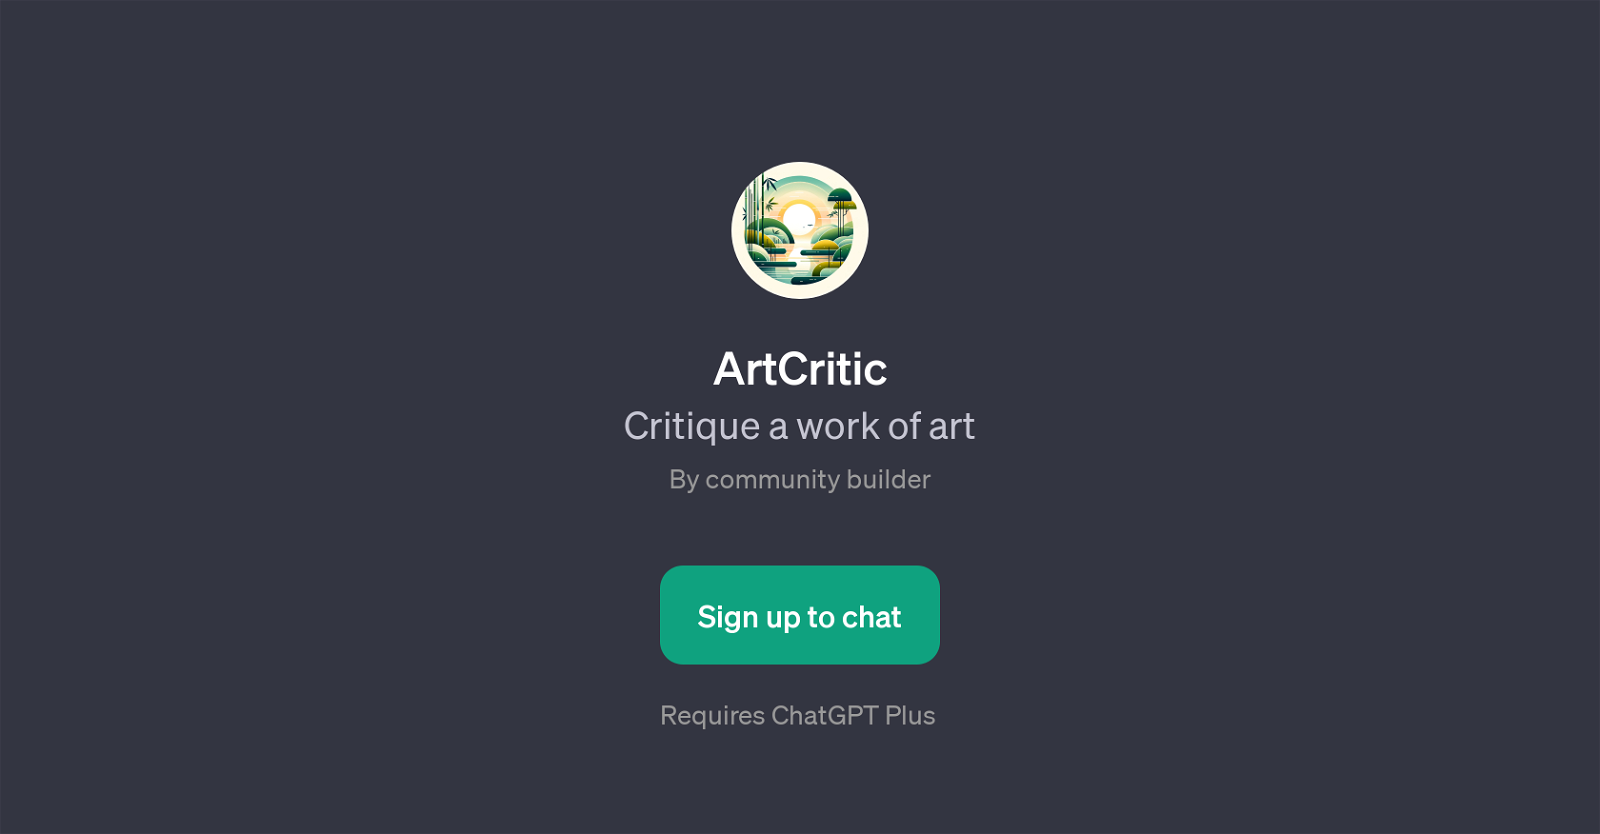 ArtCritic website